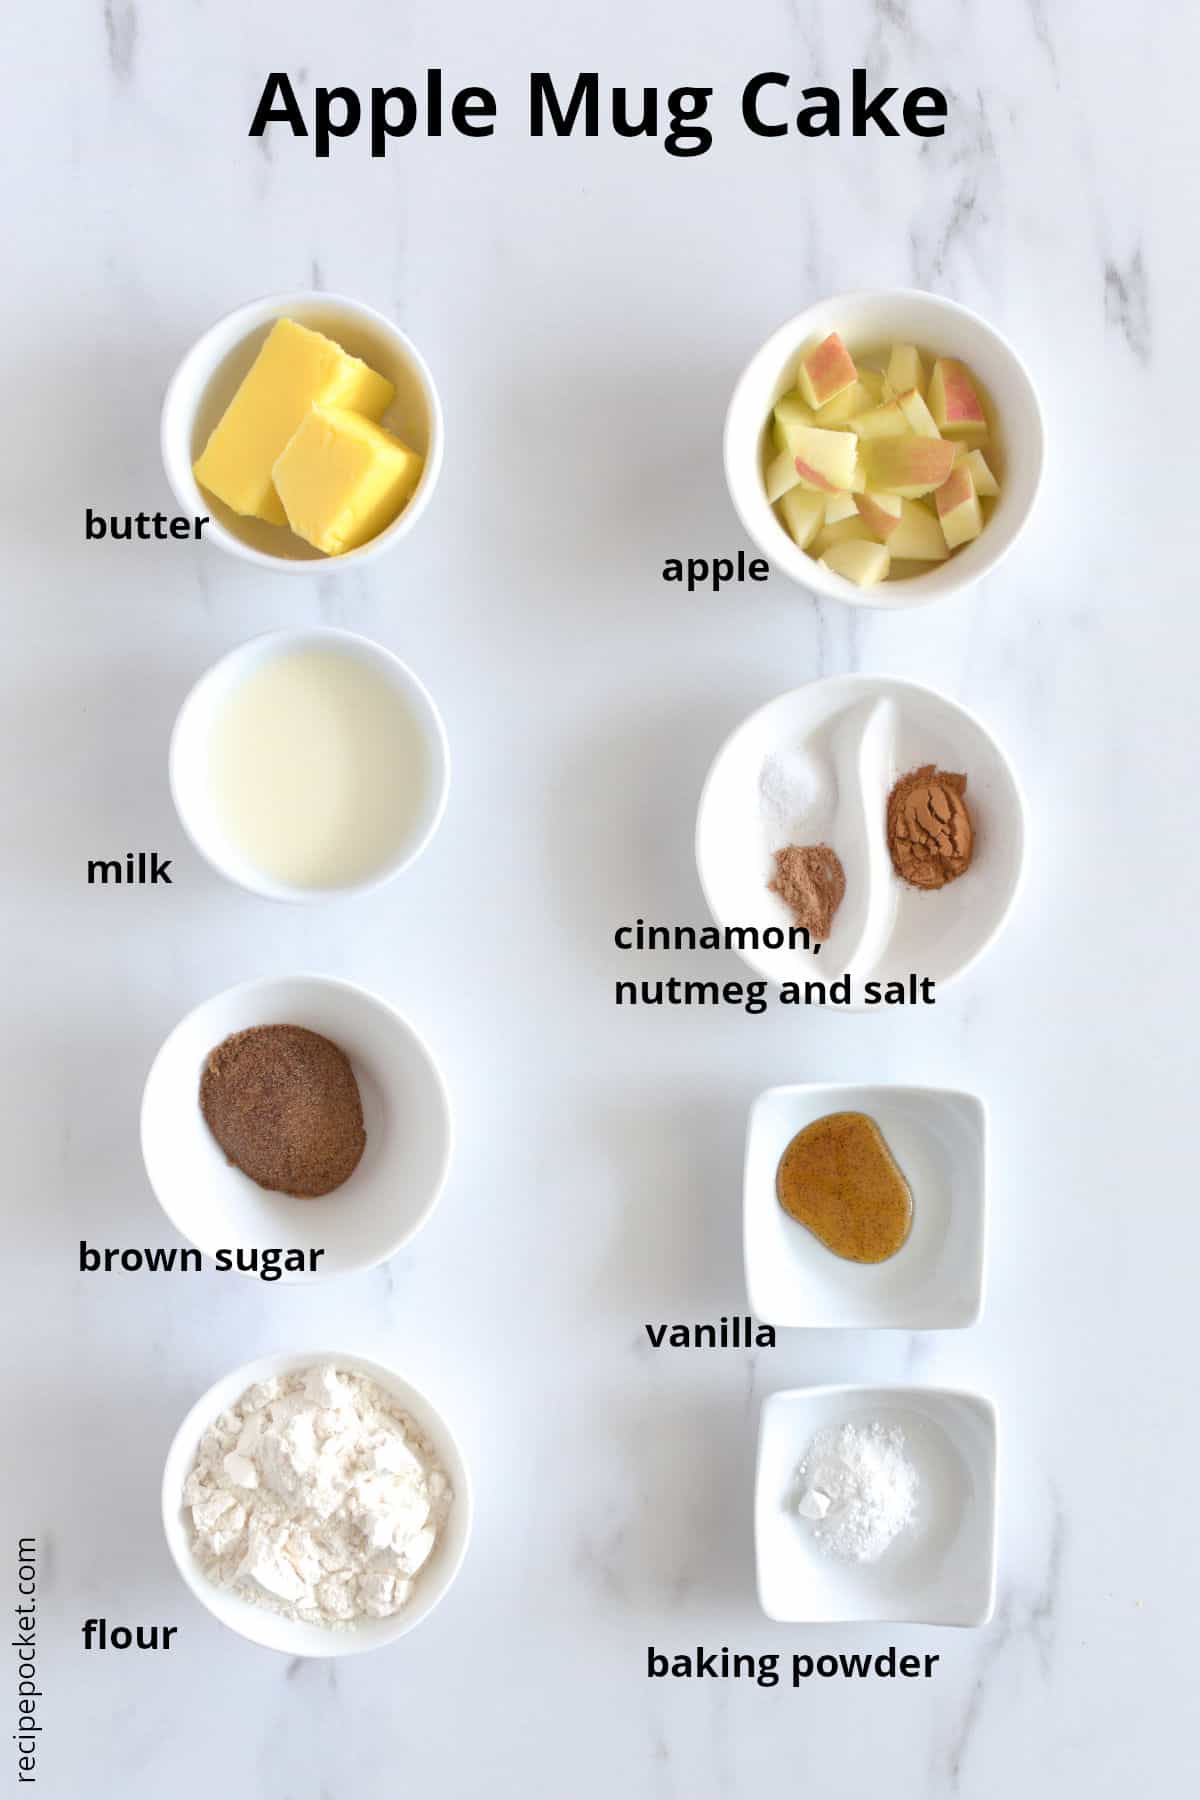 Image of ingredients needed to make an apple mug cake.